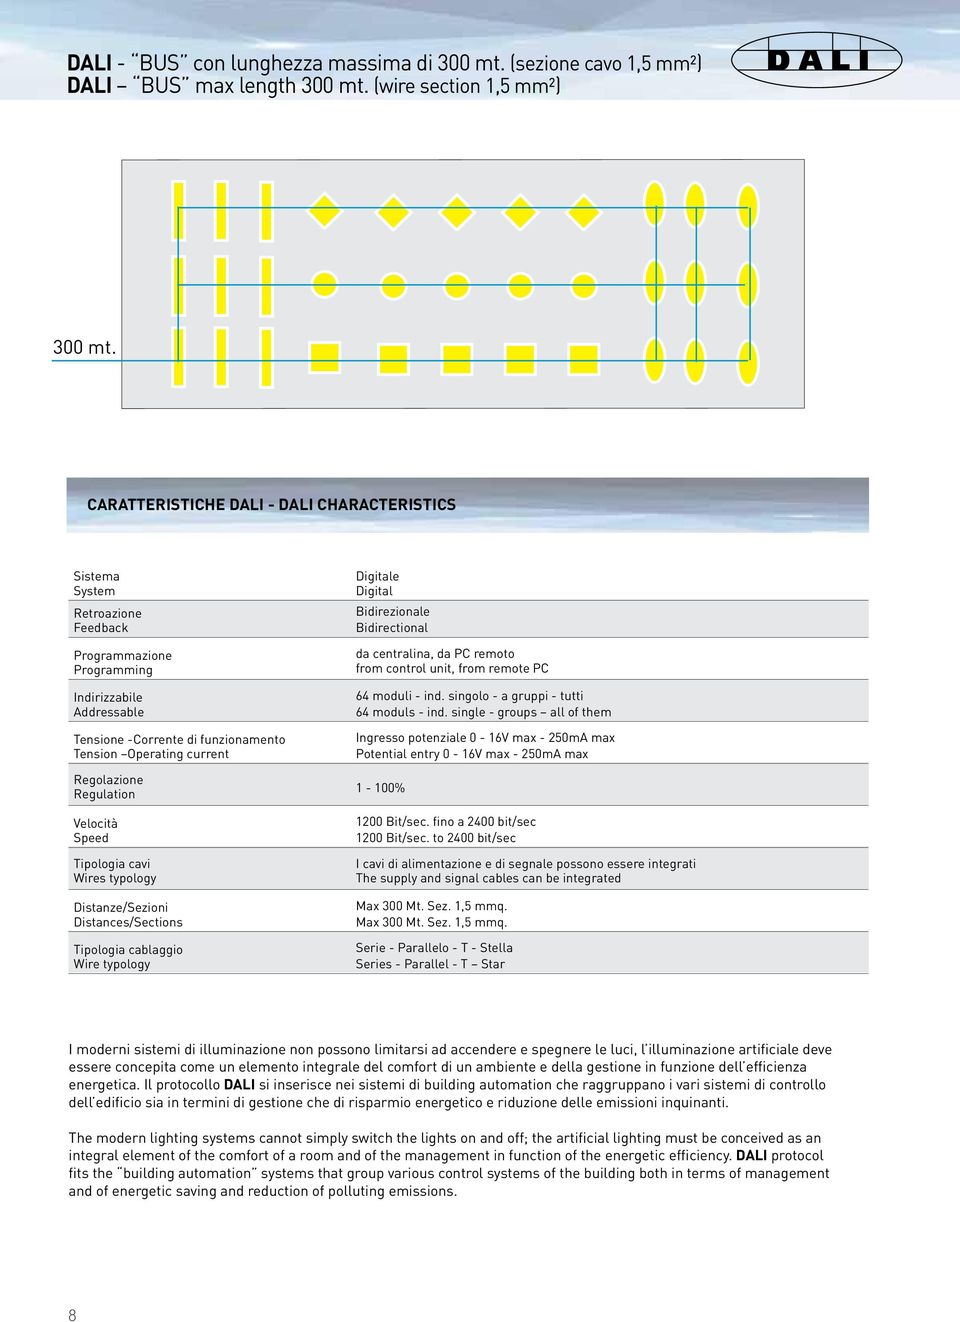 Regolazione Regulation Velocità Speed Tipologia cavi Wires typology Distanze/Sezioni Distances/Sections Tipologia cablaggio Wire typology Digitale Digital Bidirezionale Bidirectional da centralina,